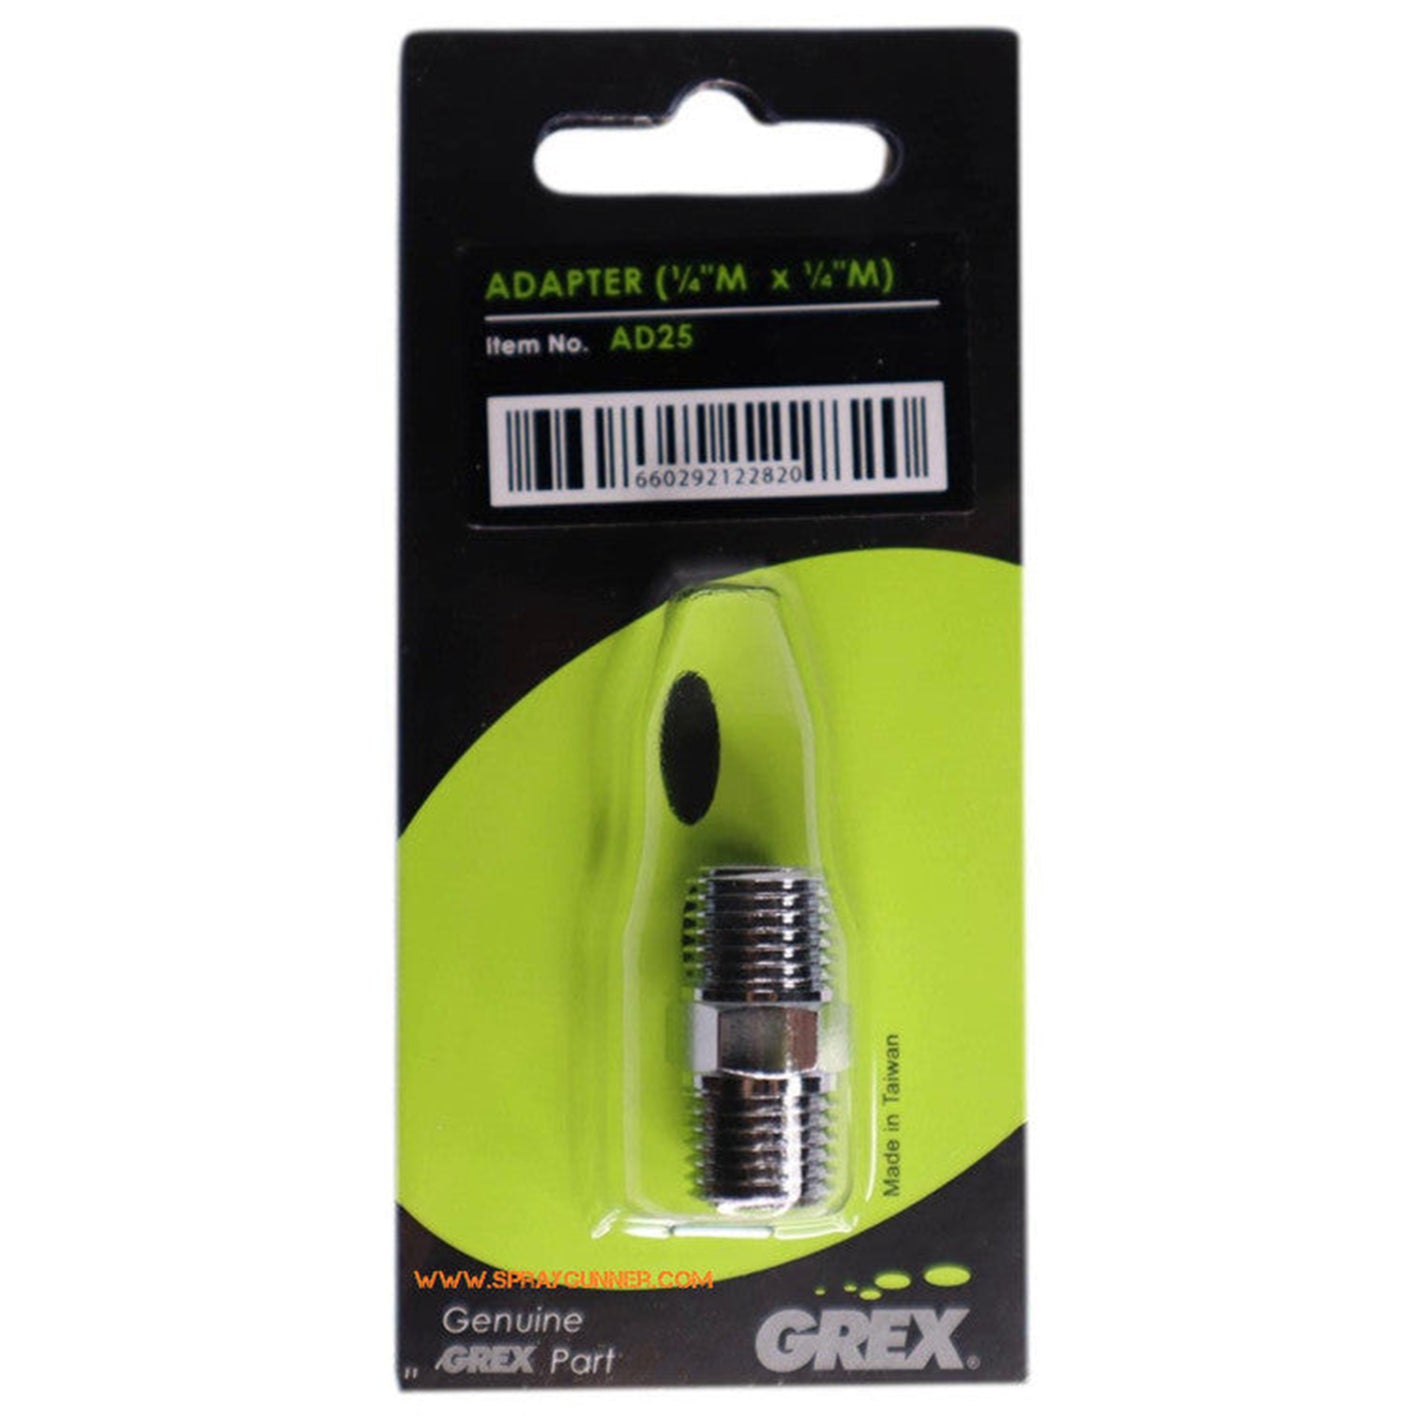 Grex Adapter, 1/4"M to 1/4"M Grex Airbrush